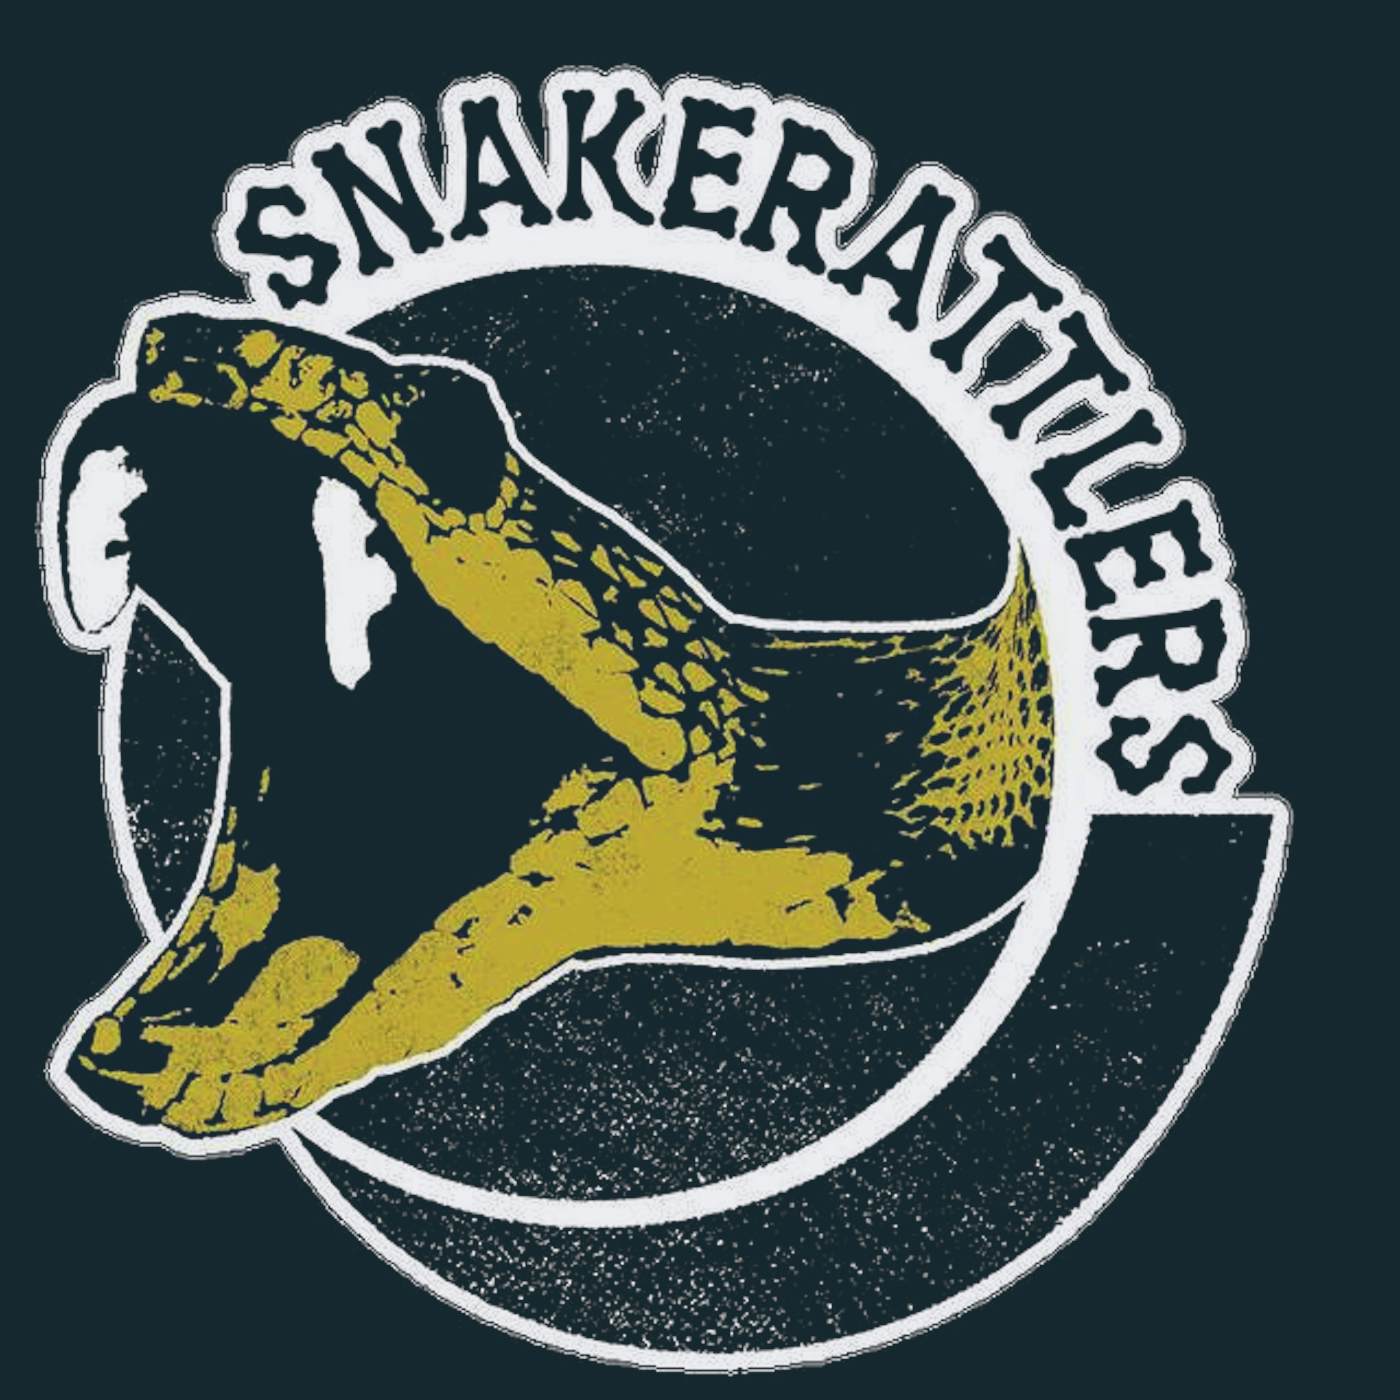 Snakerattlers